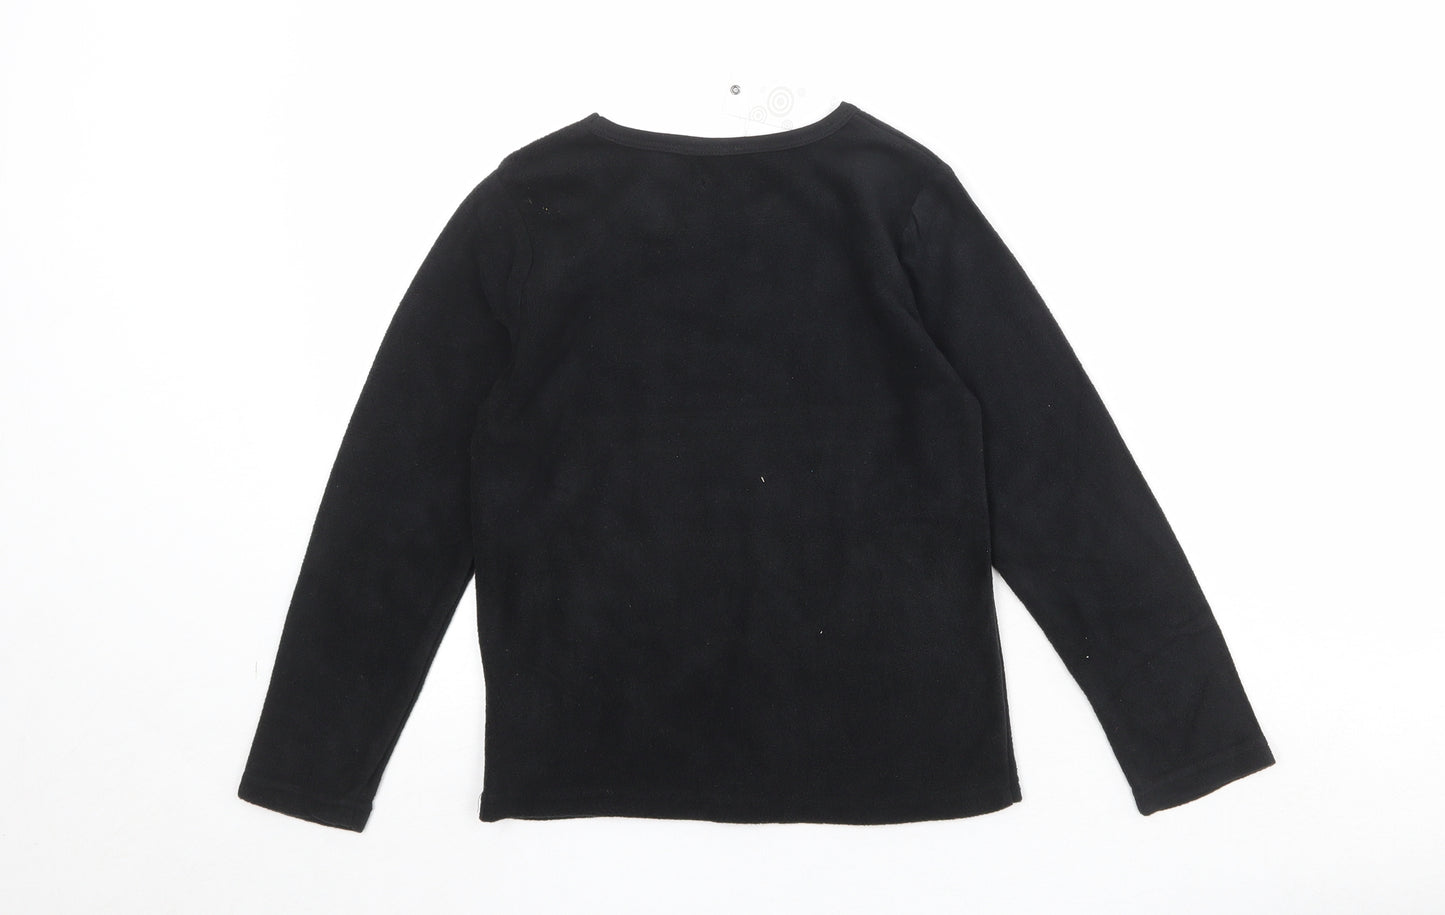 Jeff Banks Boys Black Polyester Basic T-Shirt Size 8-9 Years Round Neck Pullover - Gamer